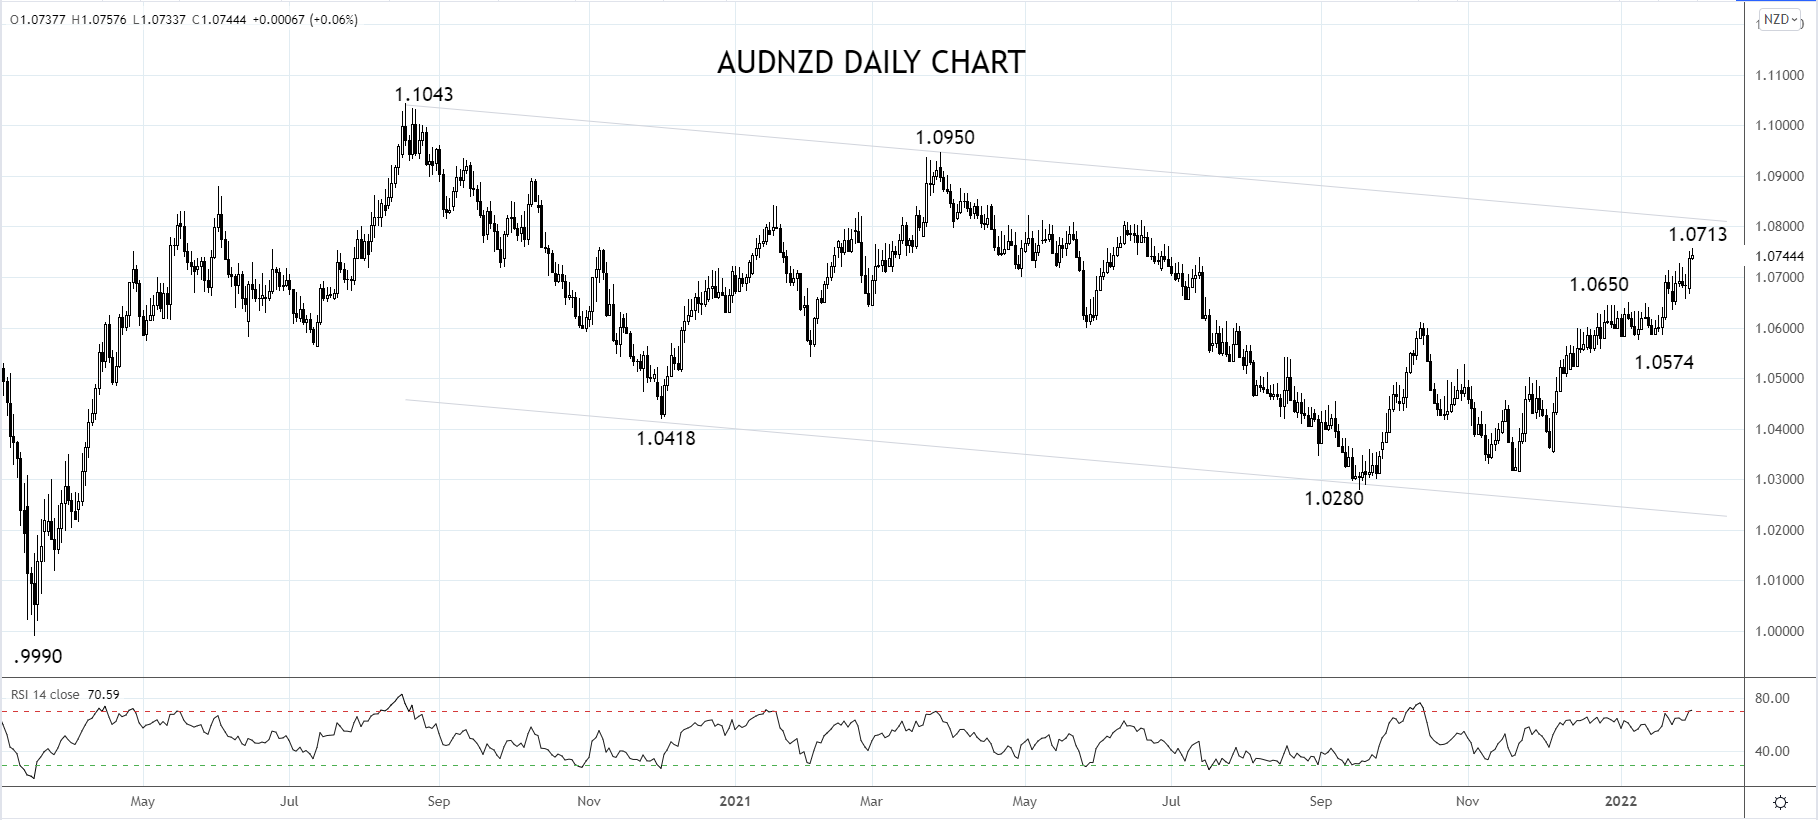 AUDNZD Daily Chart 1st of Feb 2022